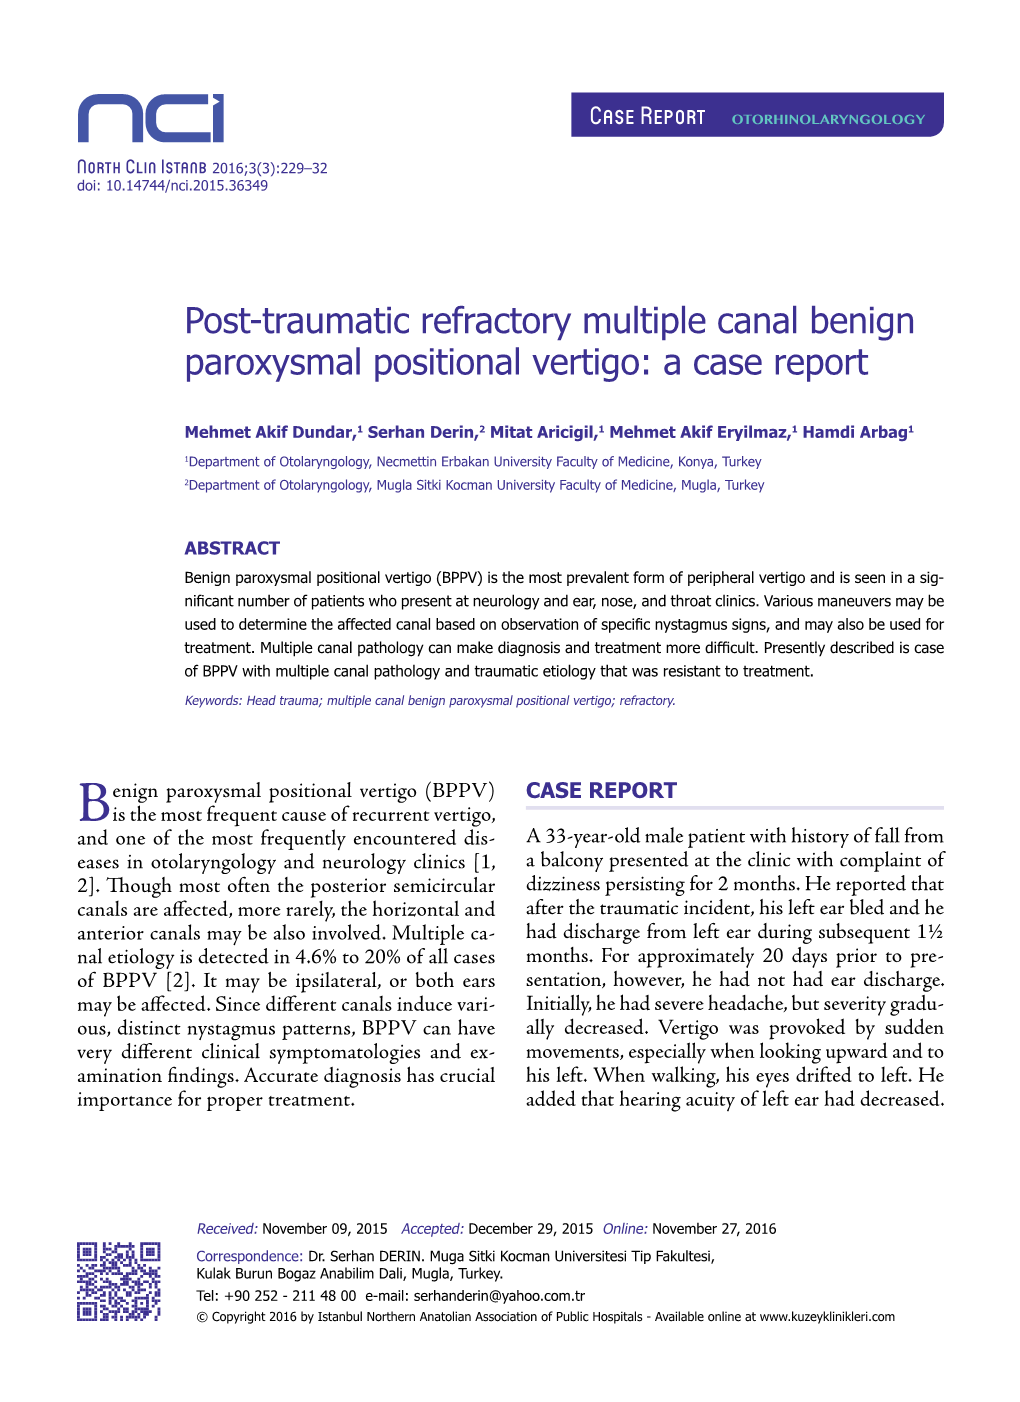 Post-Traumatic Refractory Multiple Canal Benign Paroxysmal Positional Vertigo: a Case Report